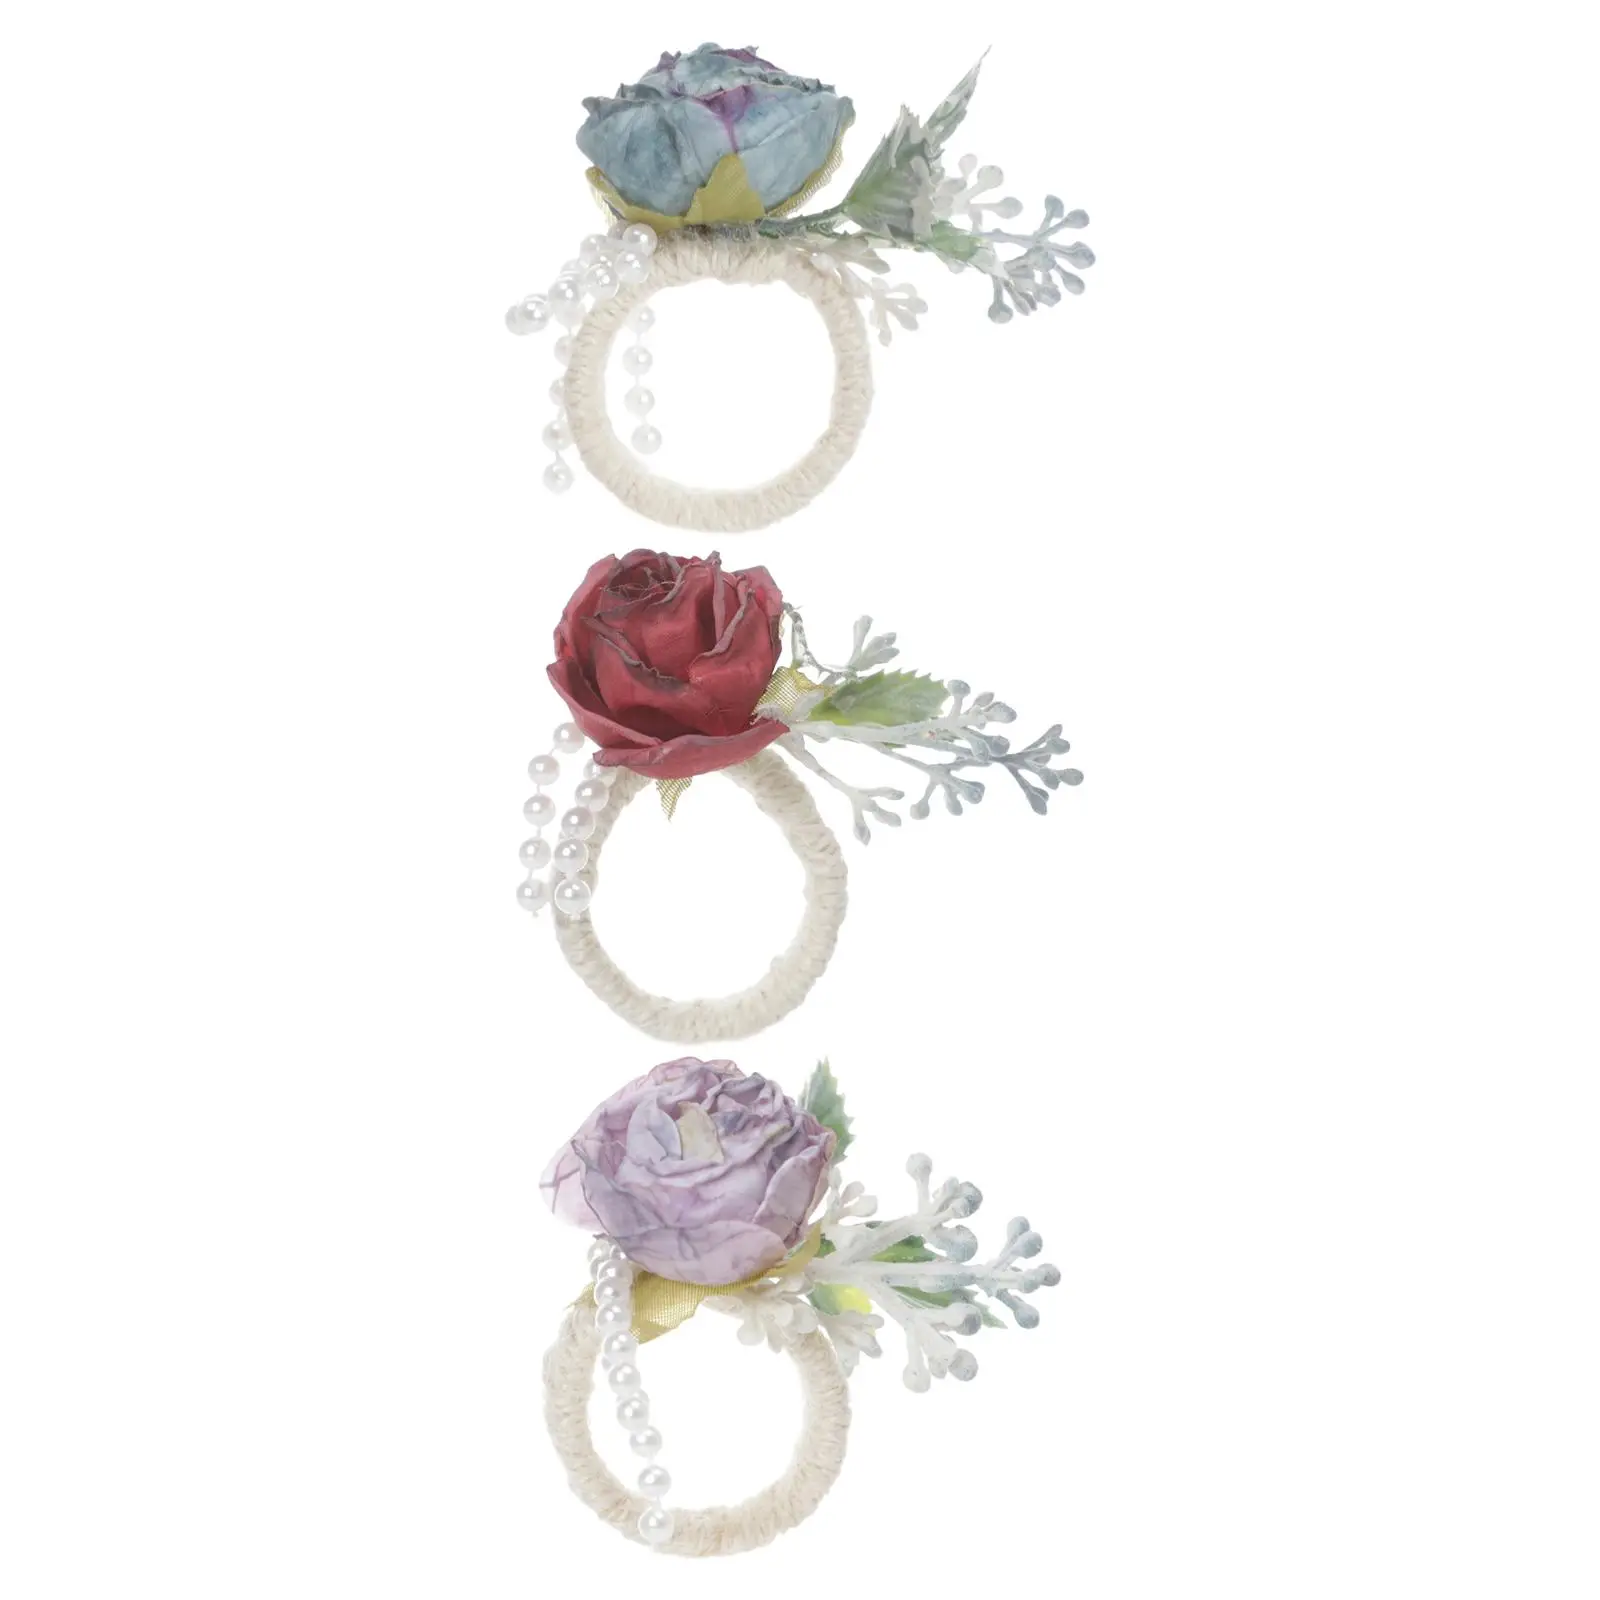 

6x кольца для салфеток с розой, романтические пряжки для салфеток, для торжественных мероприятий на День святого Валентина